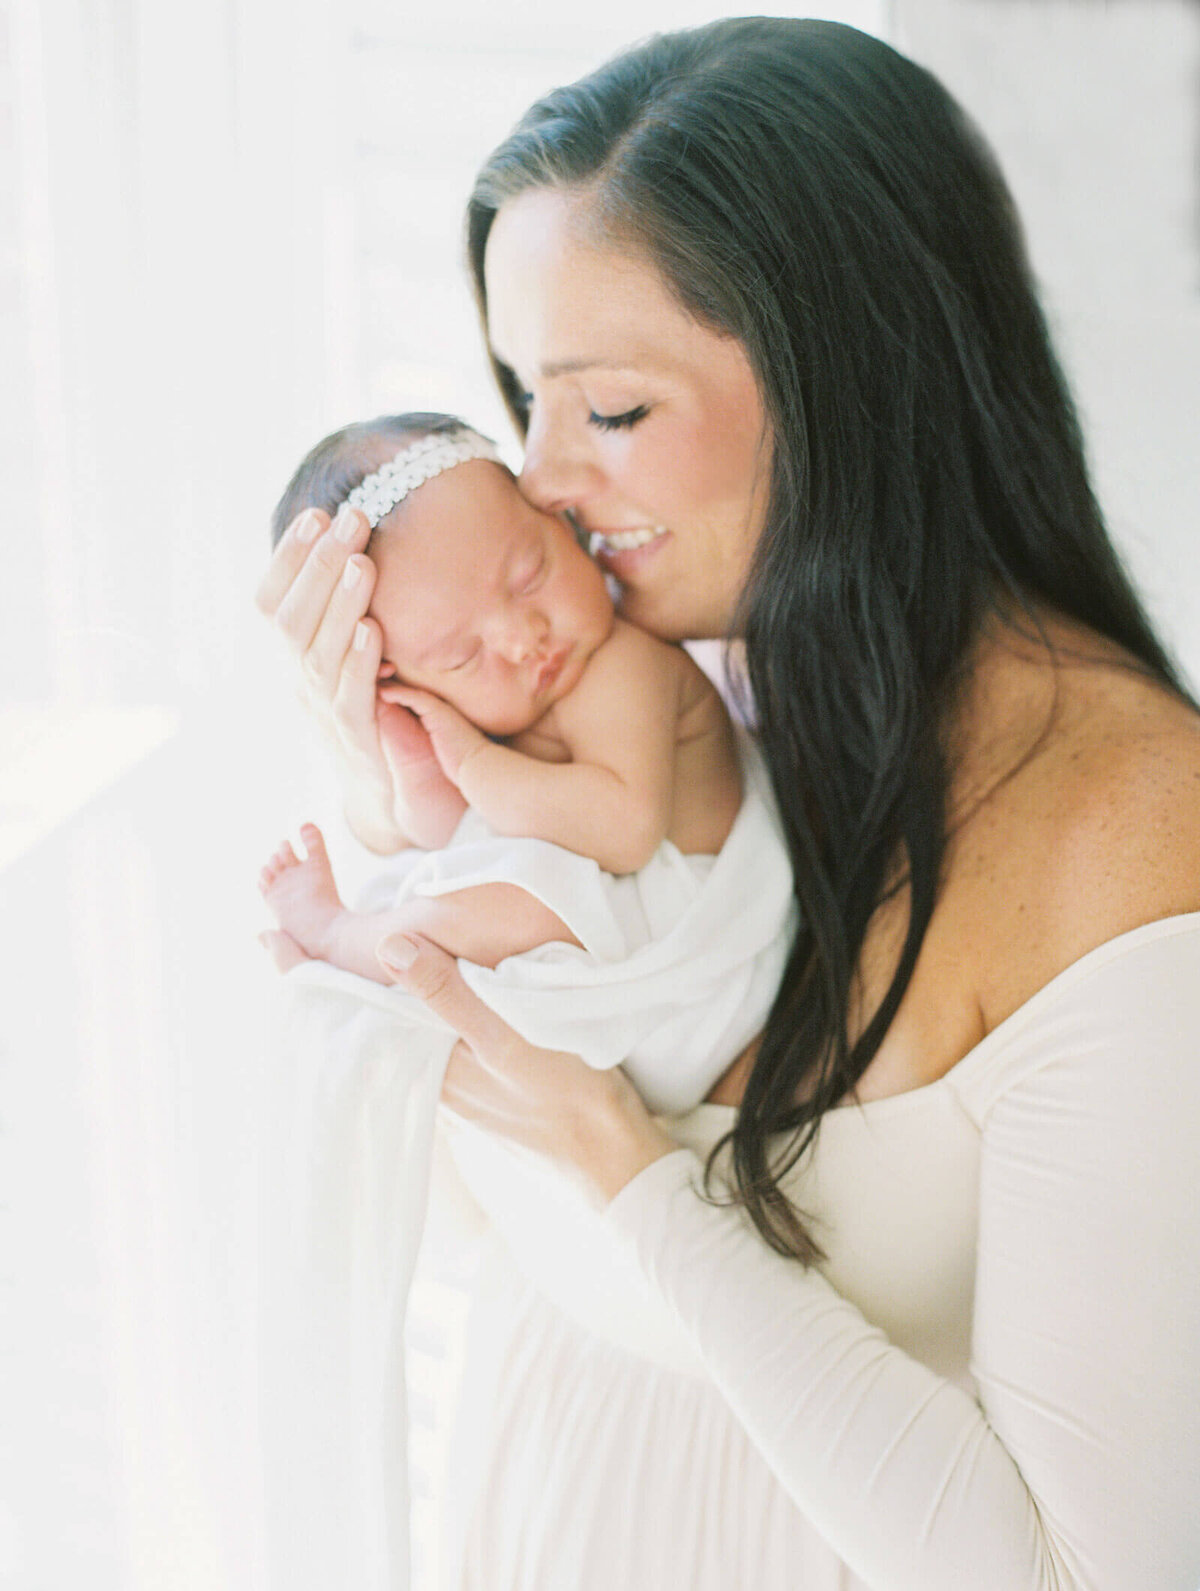 Cristina-Hope-Photography-wheaton-newborn-photos